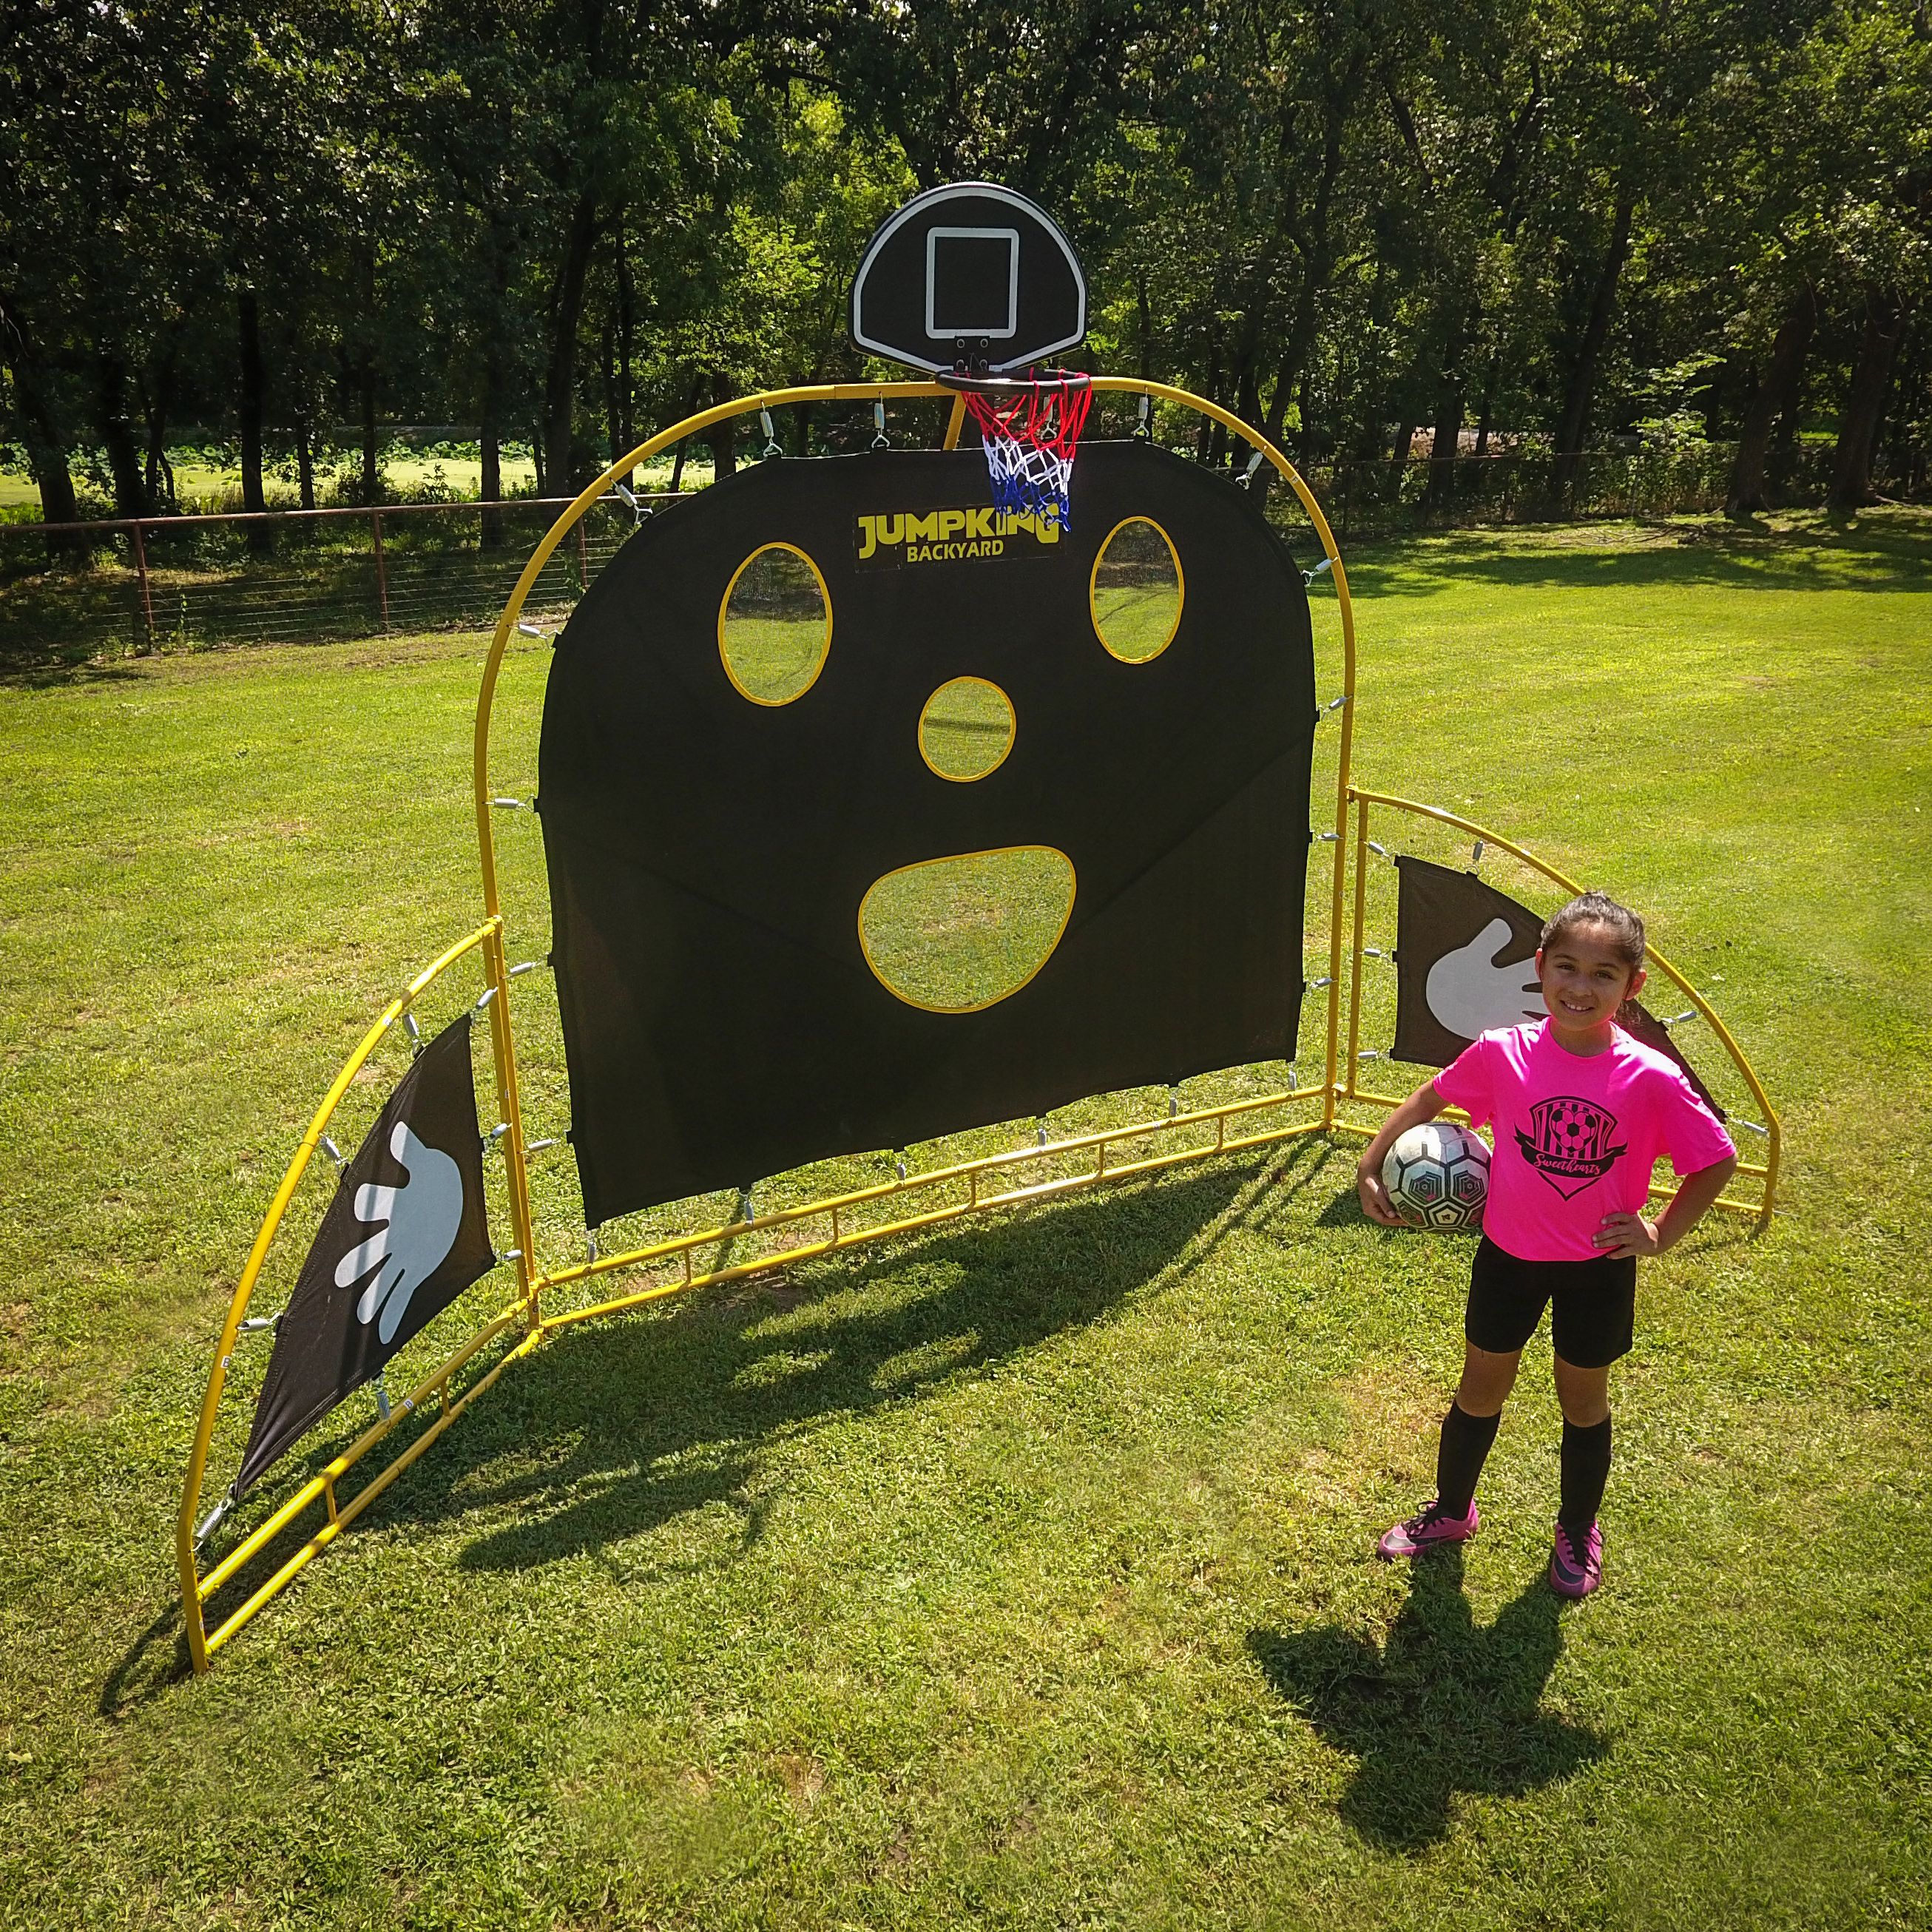 Jumpking Backyard 3 in 1 Trainer (Basketball, Football, Soccer) Yellow&Black - image 1 of 8